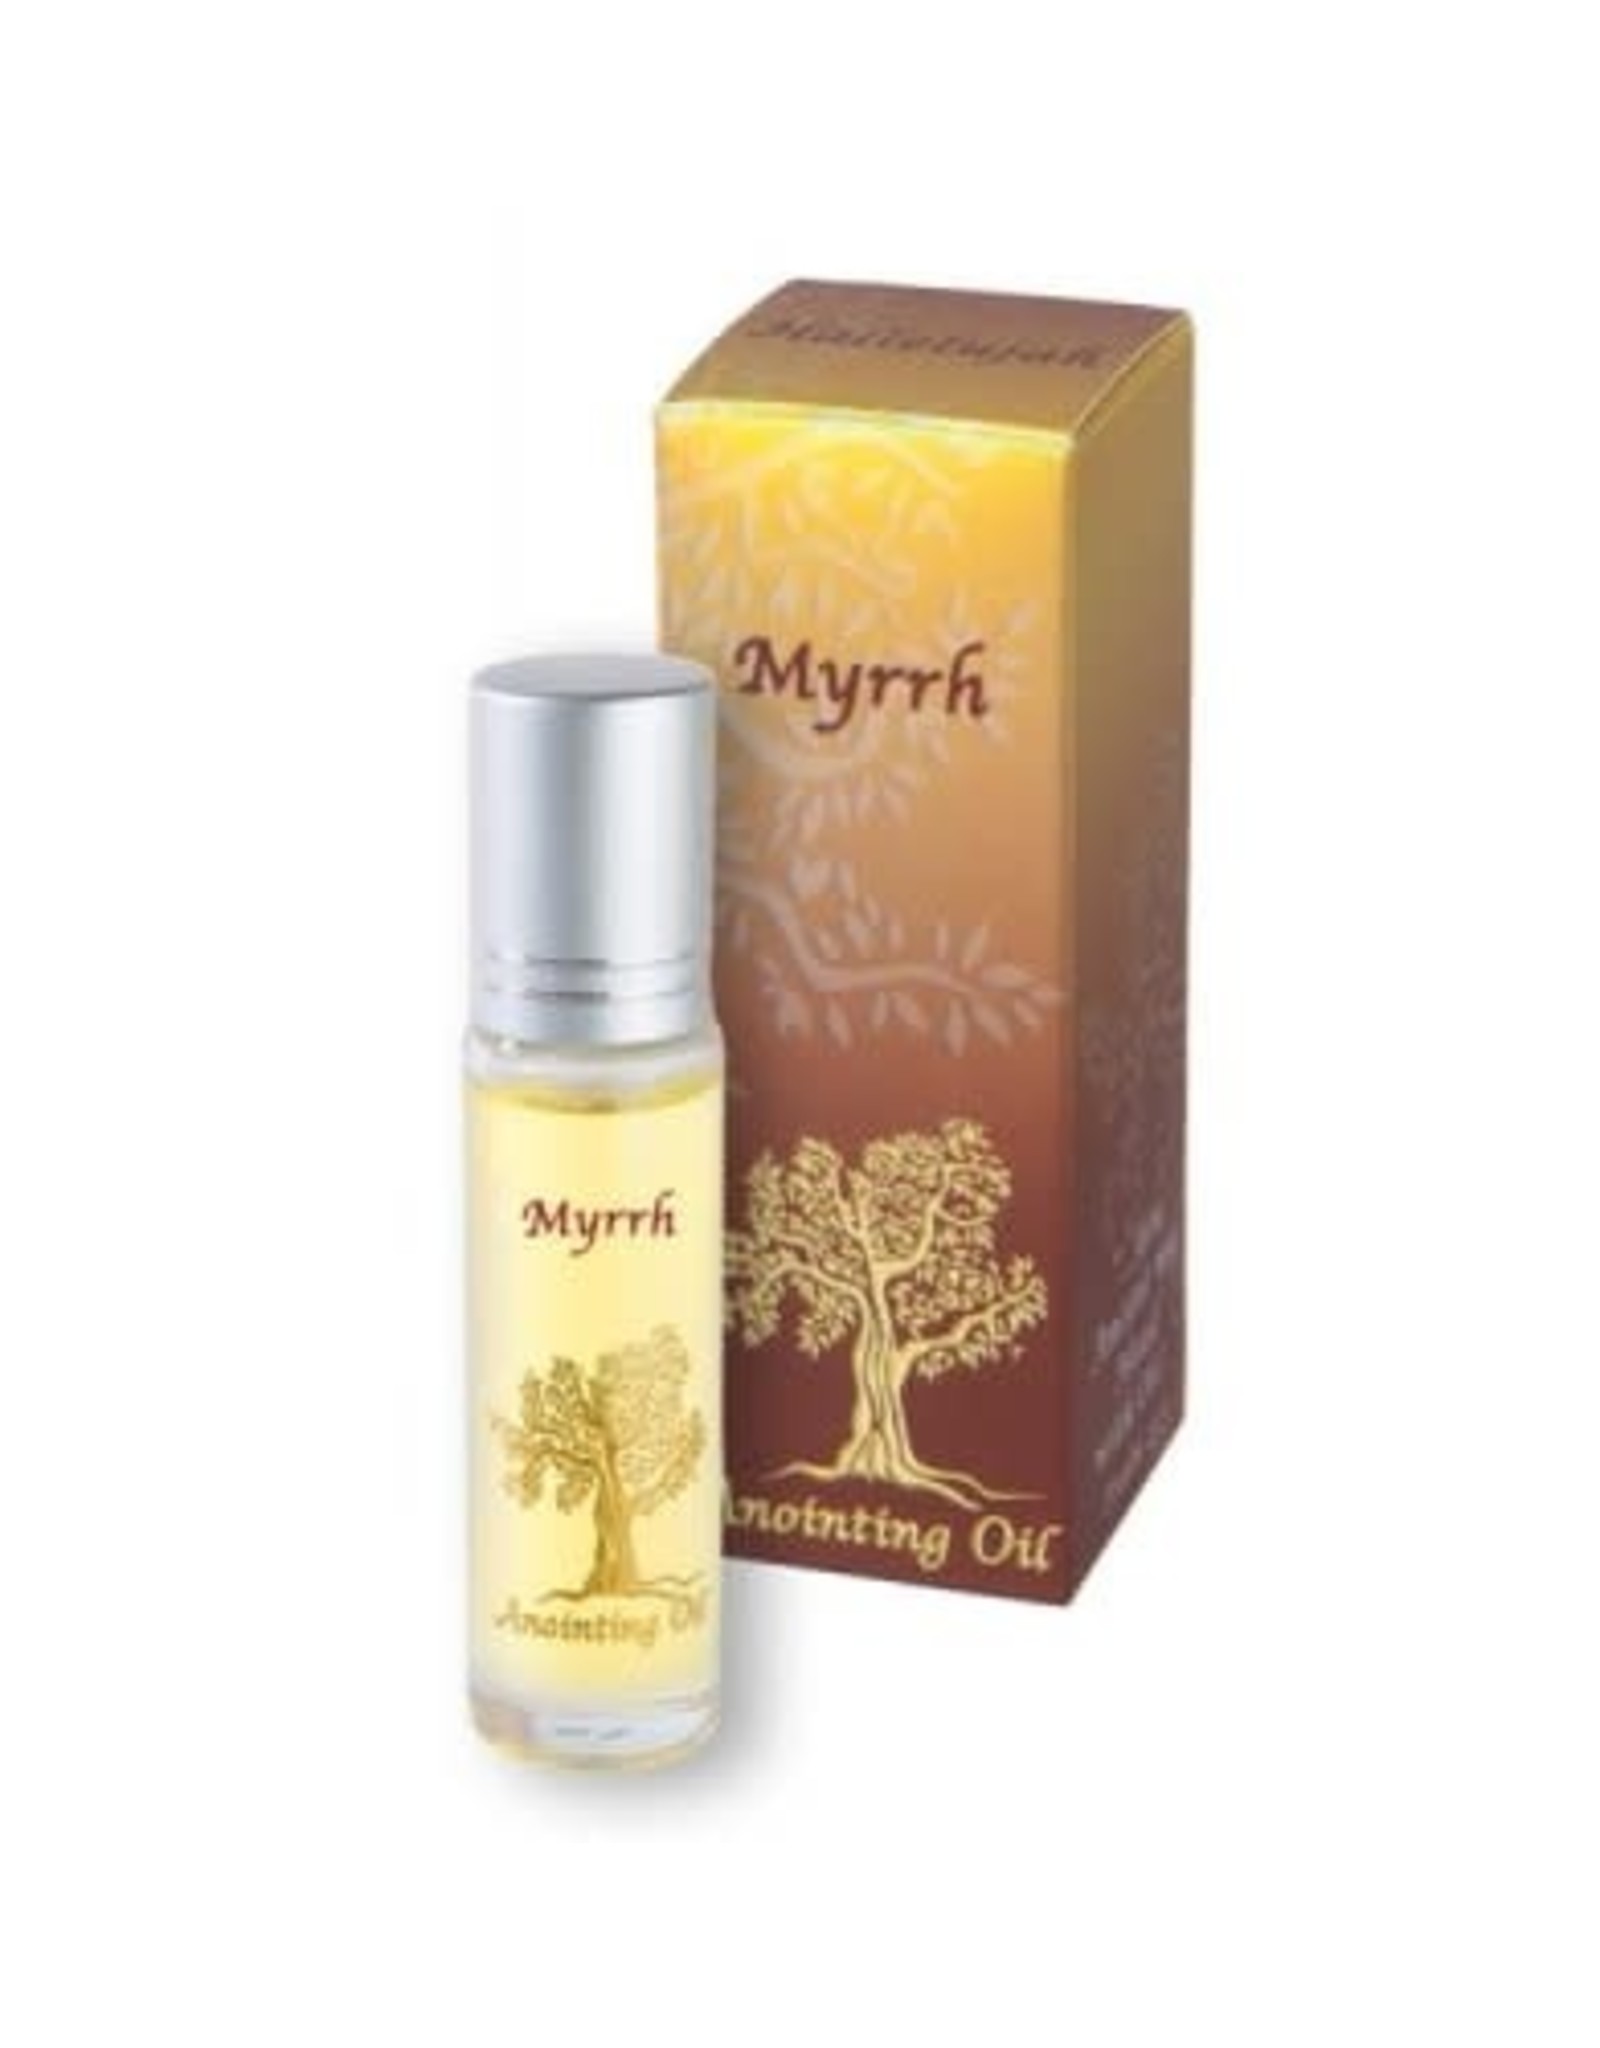 Holy Land Gifts Anointing Oil: Myrrh